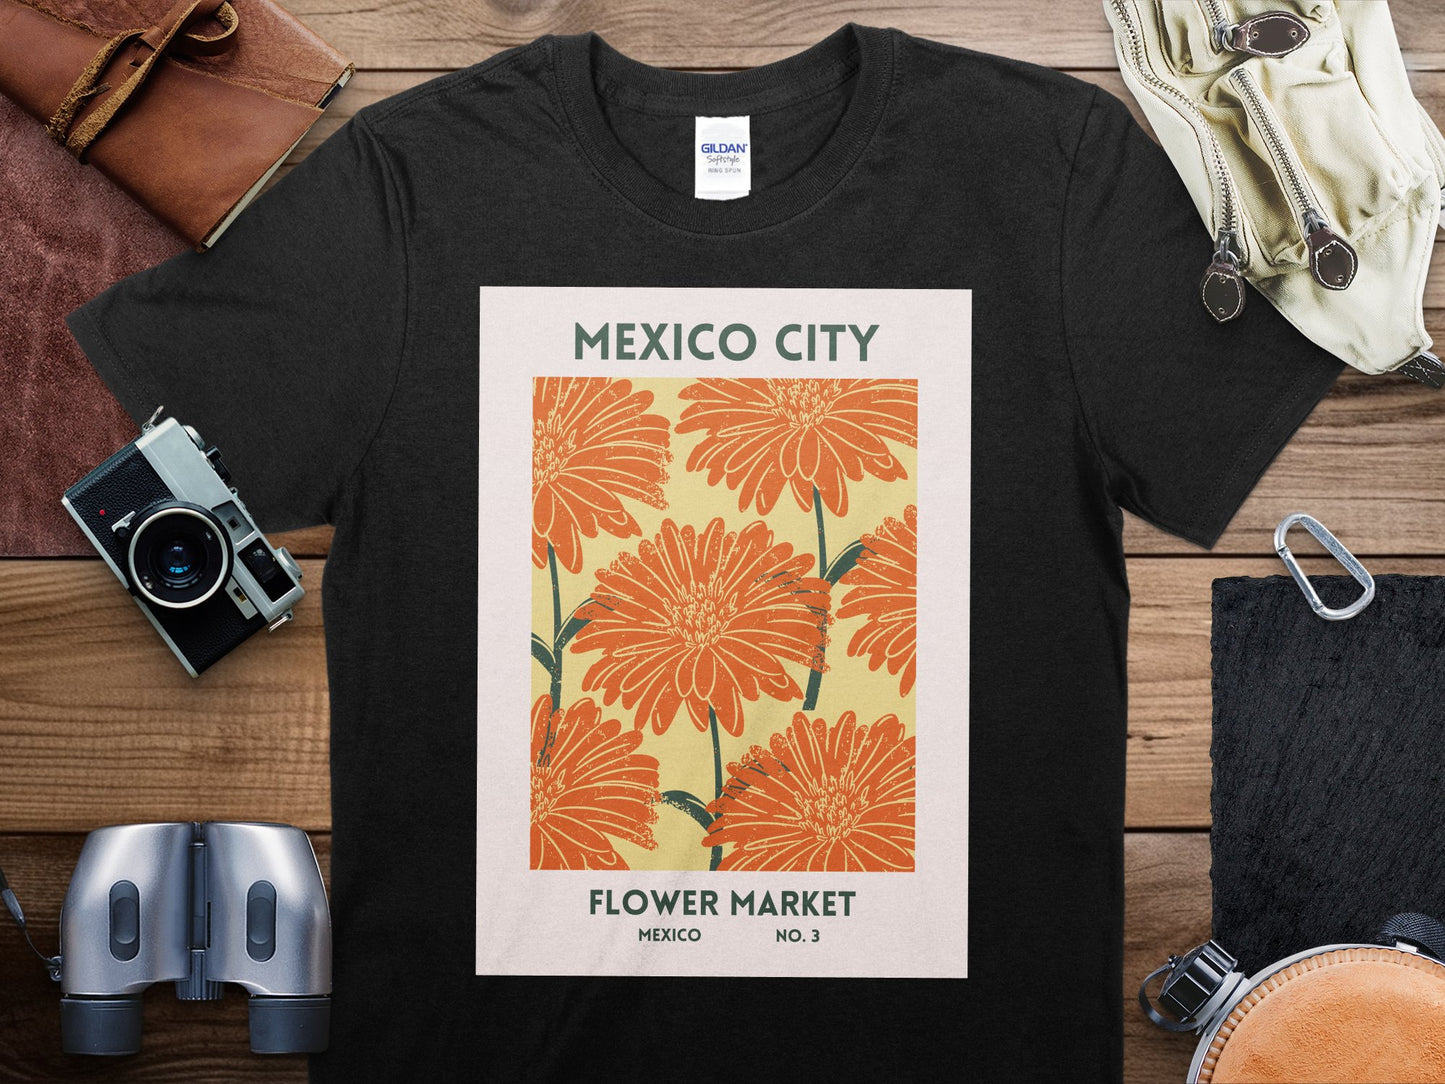 Mexico City Flower Market Mexico T-Shirt, Mexico City Flower Market Travel Shirt